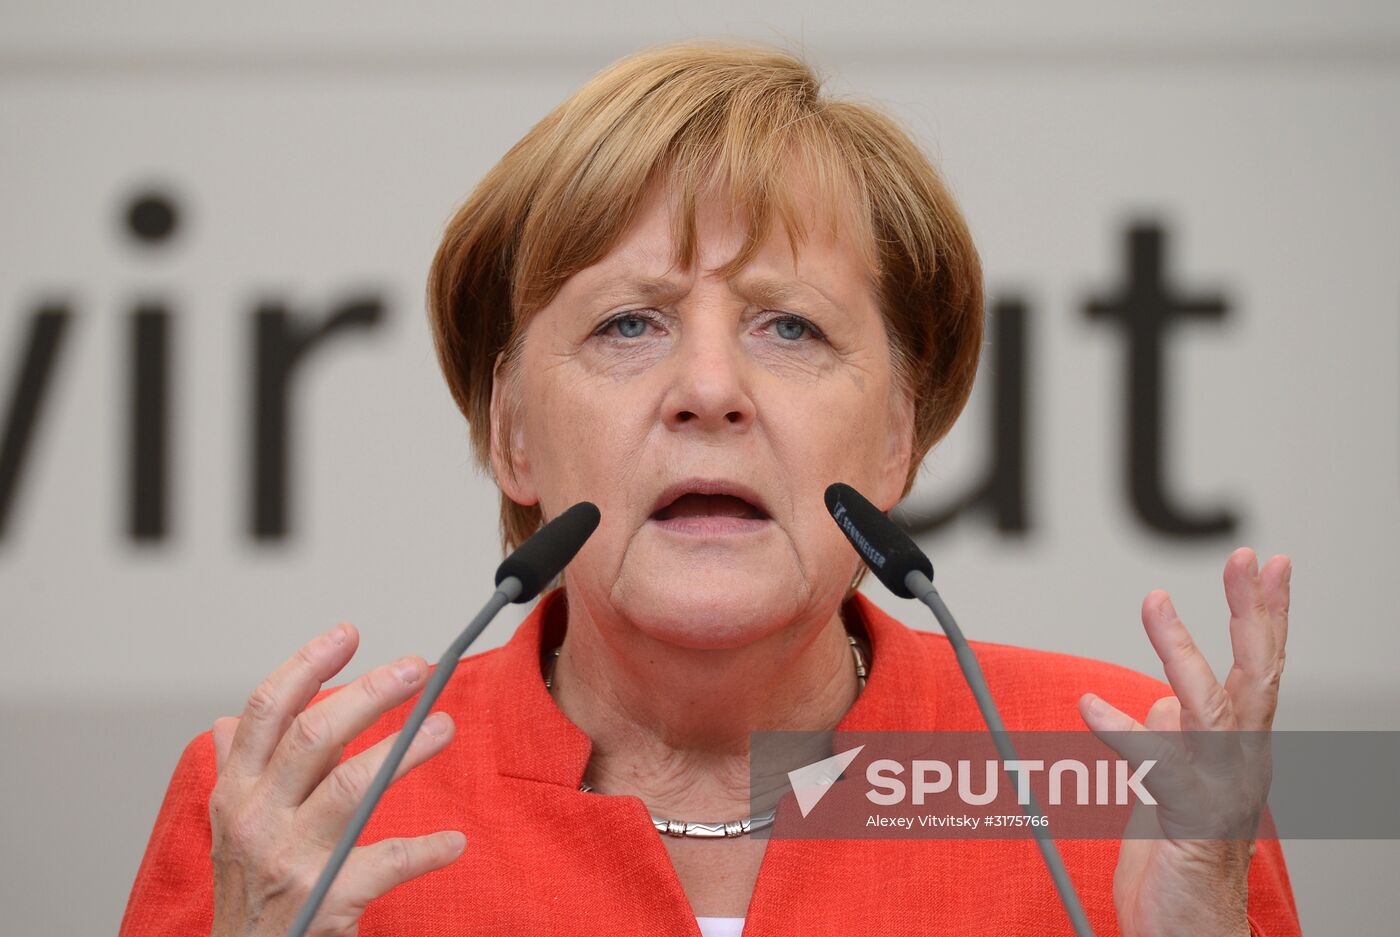 Angela Merkel makes election campaign speech in Munster